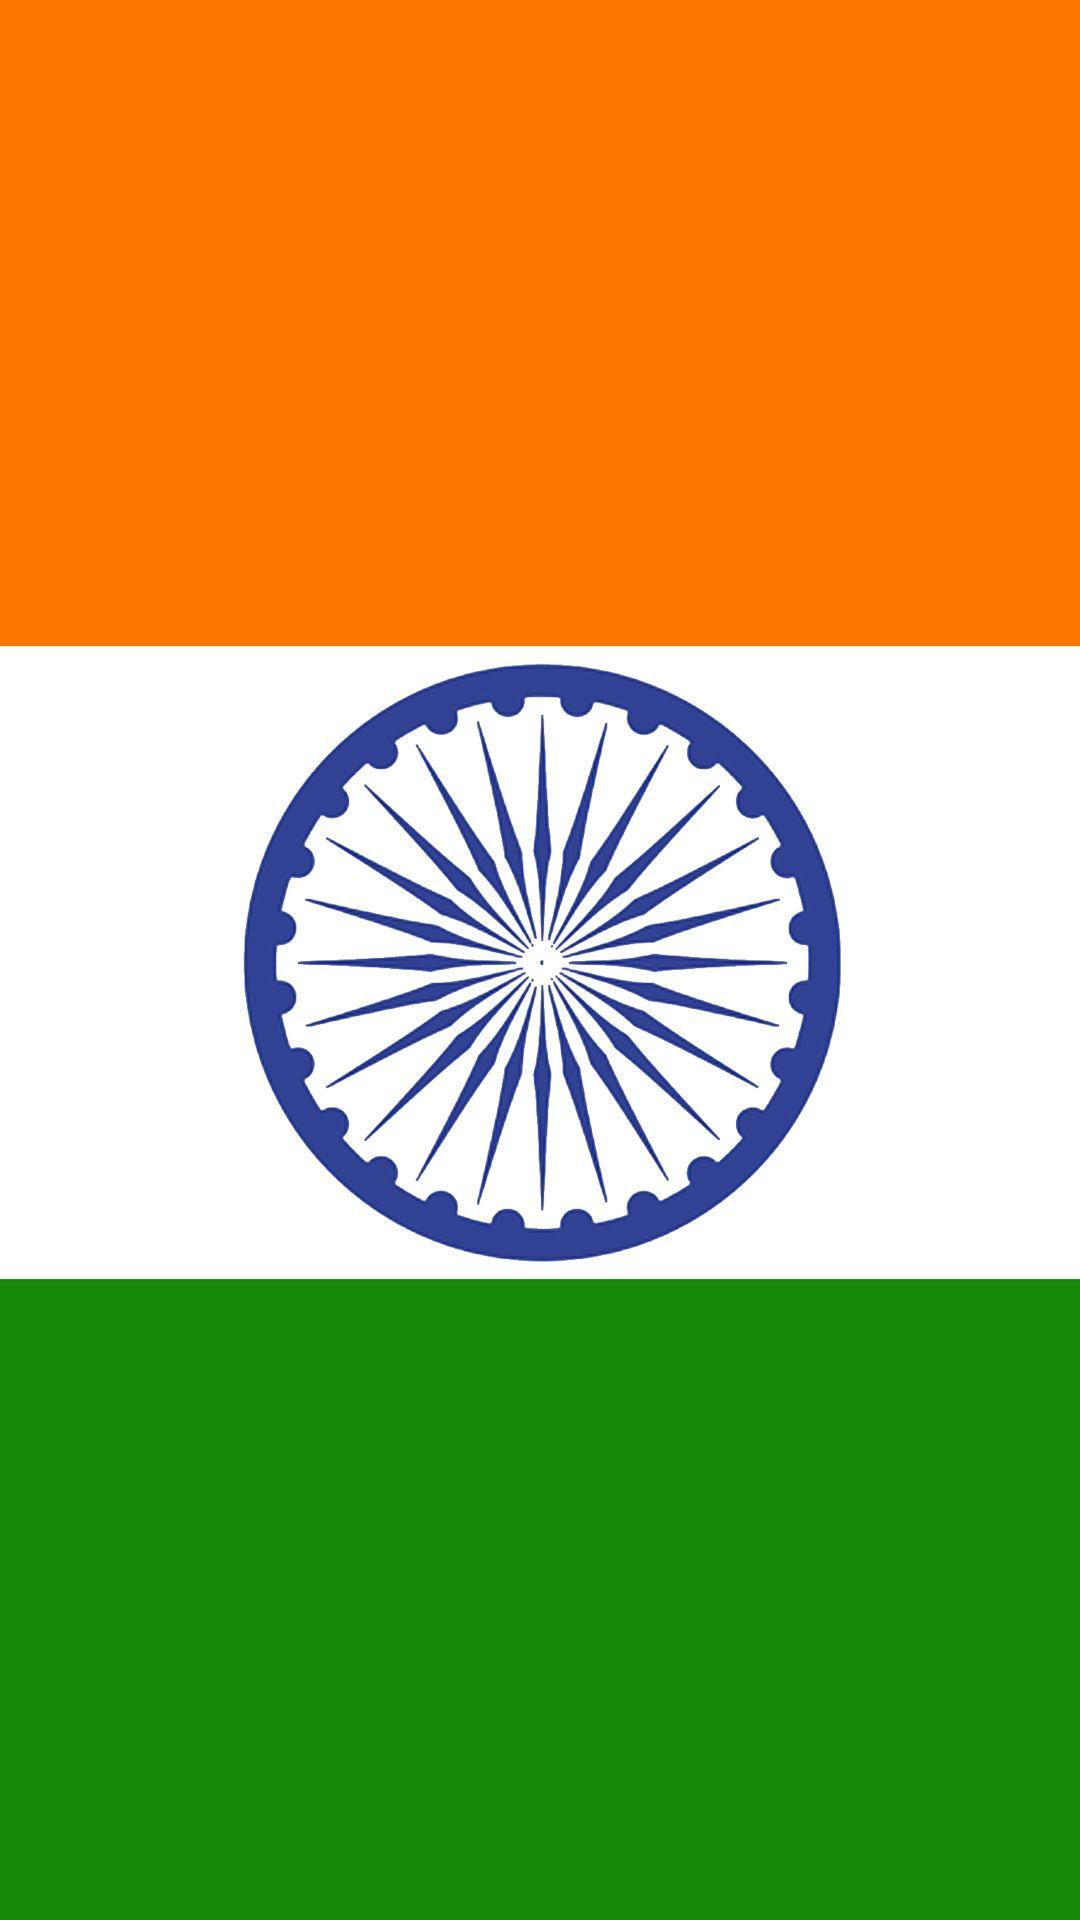 3D Tiranga Flag Image Free Download HD Wallpaper Wallpaper. Wallpaper Download. High Resolution Wallpaper. Indian flag wallpaper, India flag, Indian flag colors